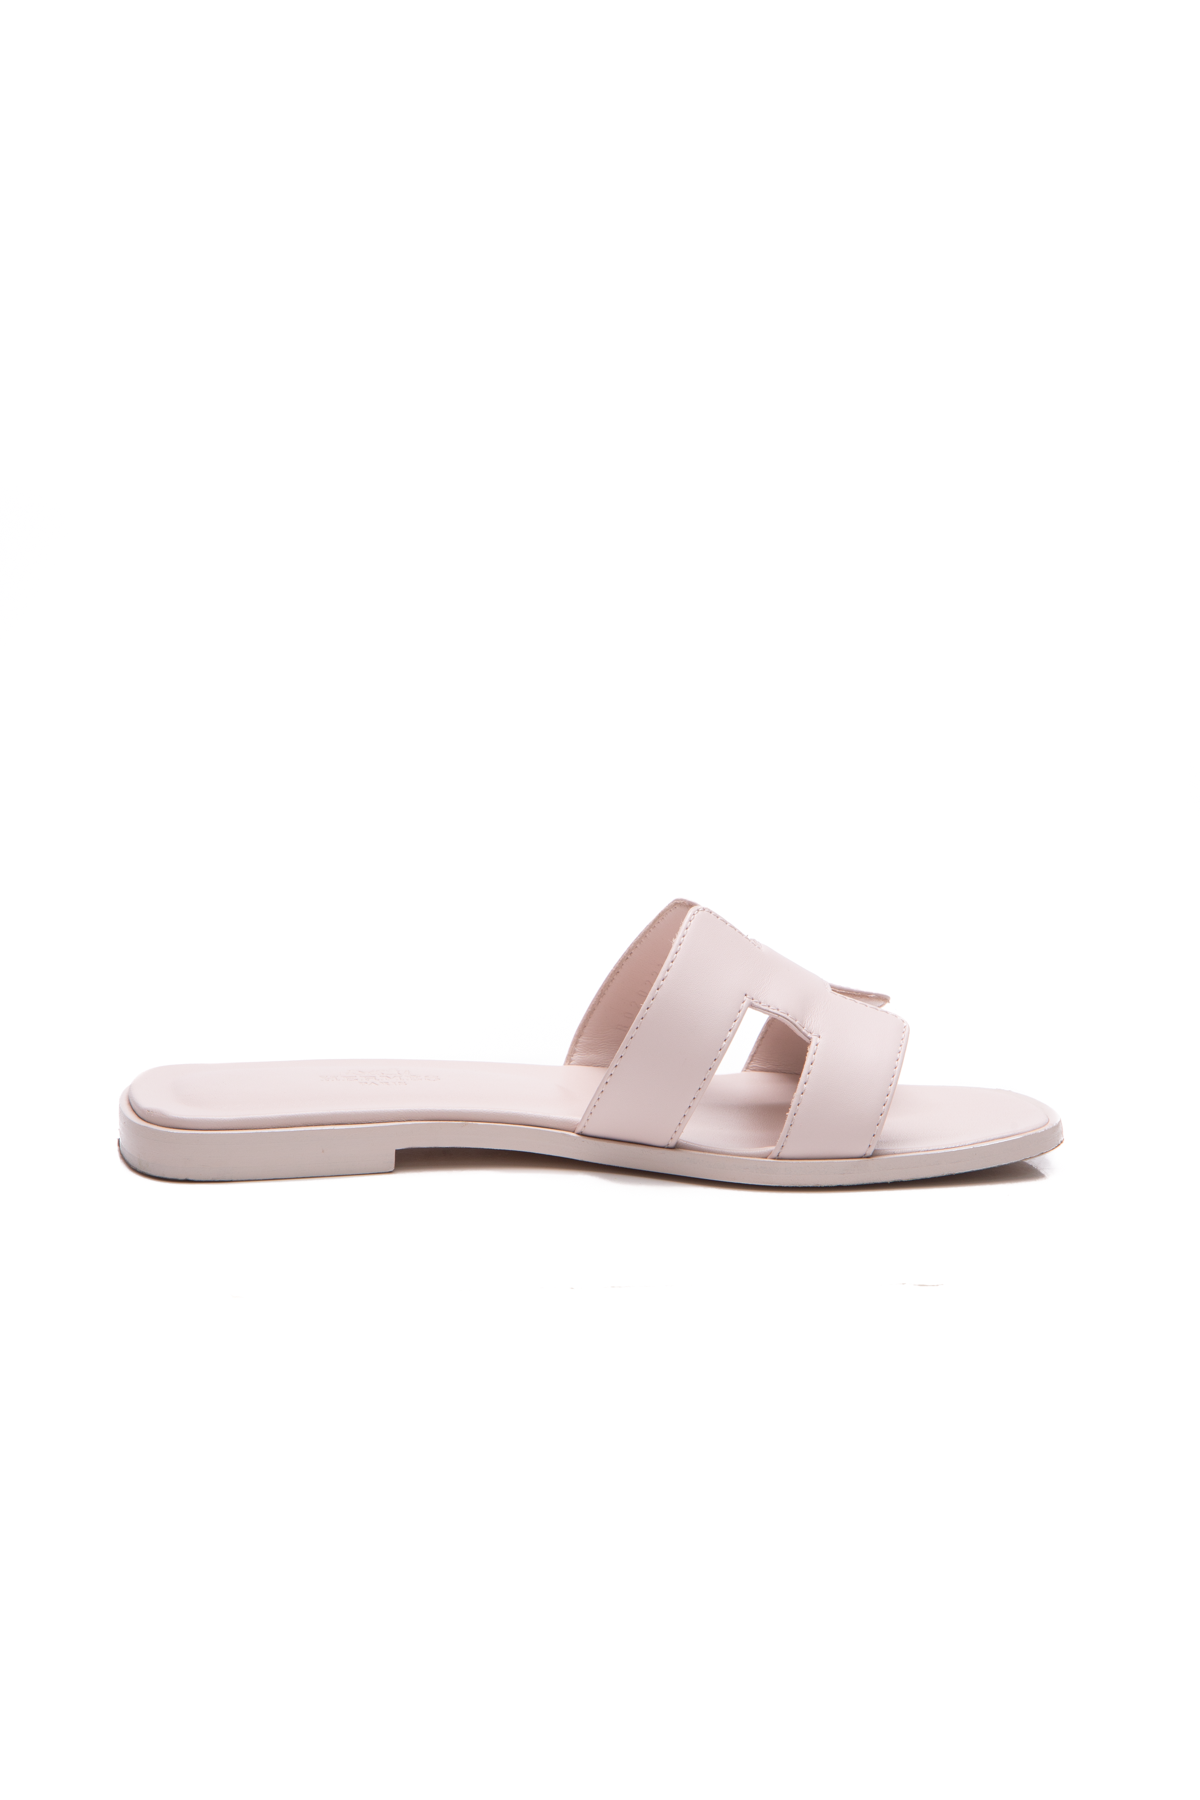 Oran sandal | Hermès Malaysia